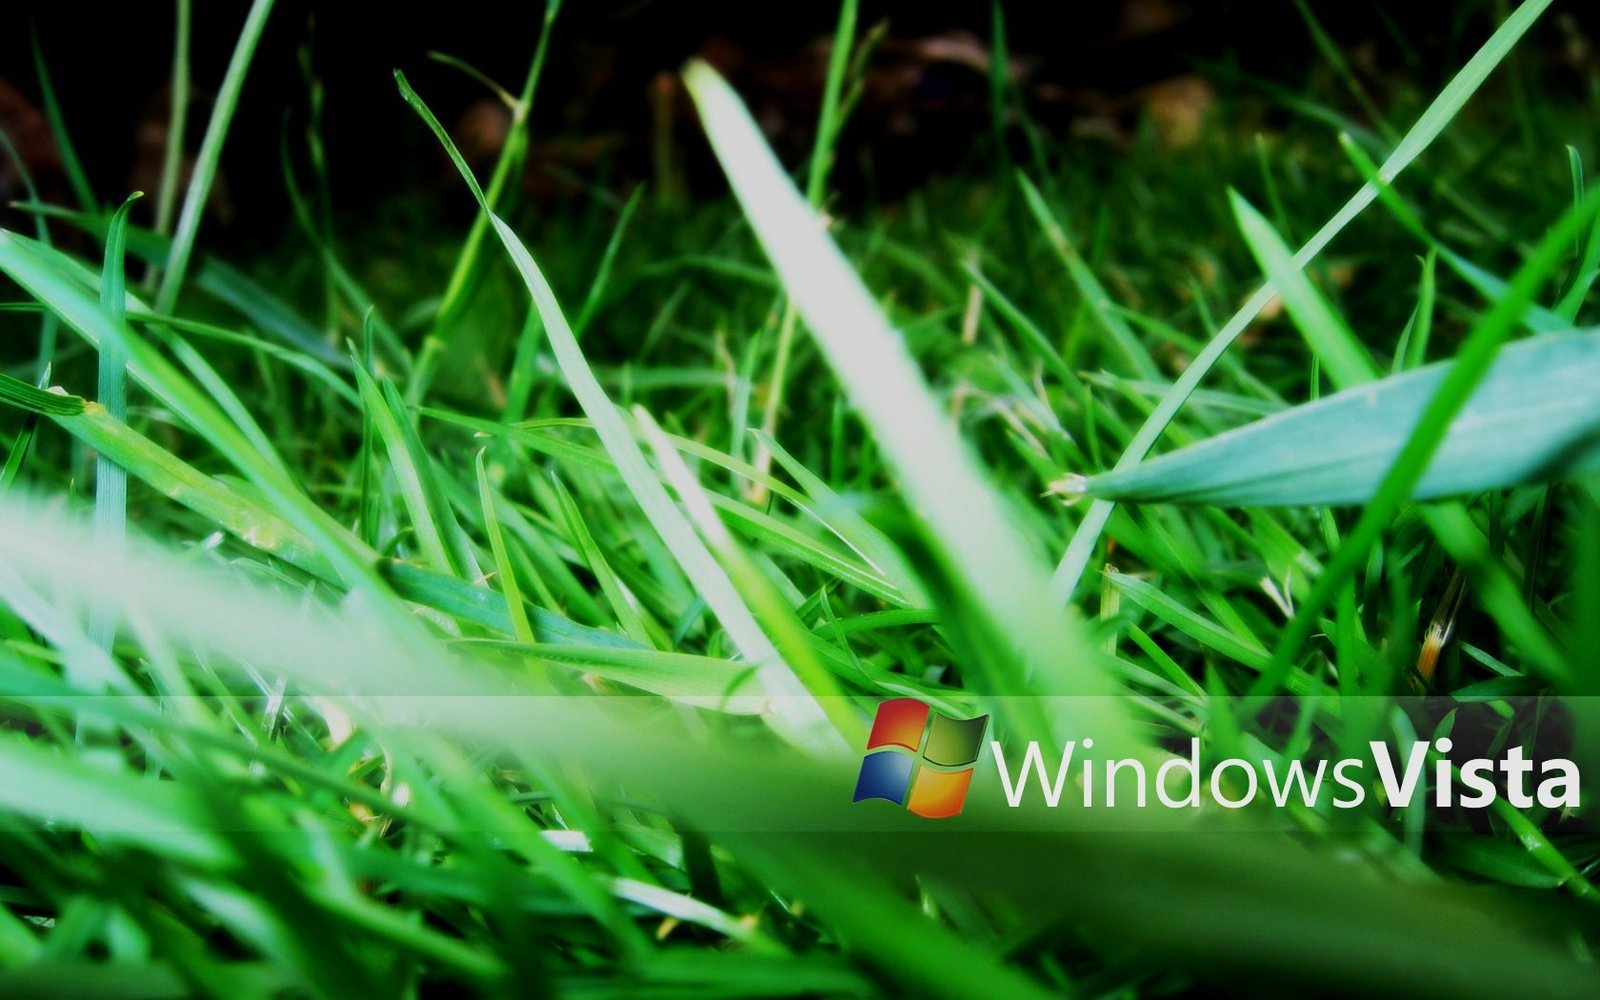 Windows Vista Grass Wallpaper By Valorieketlyn